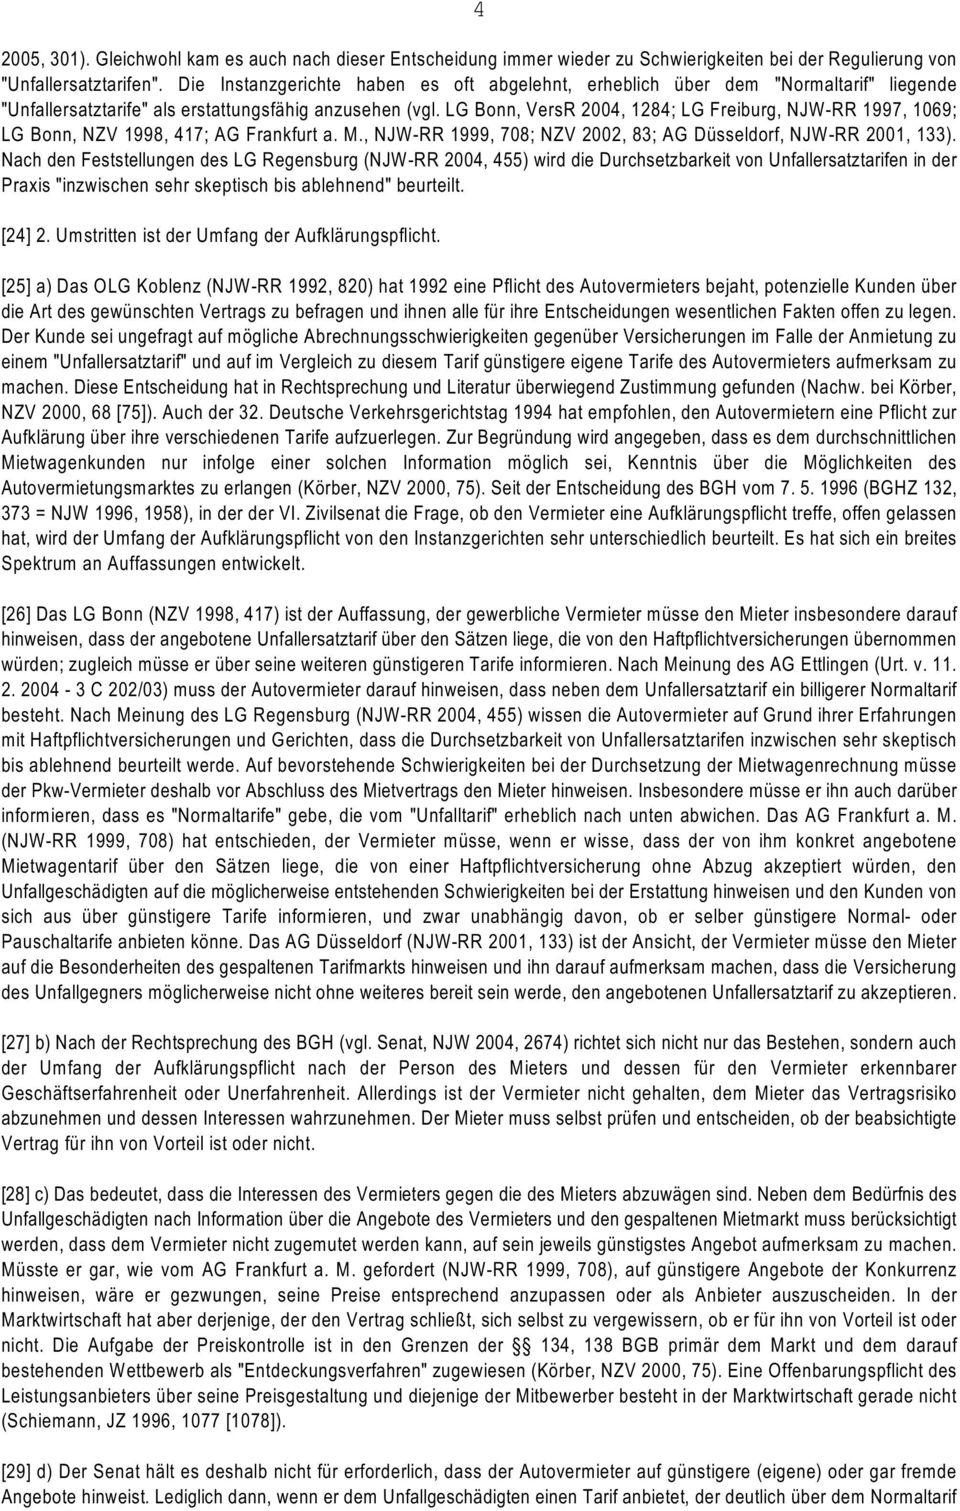 LG Bonn, VersR 2004, 1284; LG Freiburg, NJW-RR 1997, 1069; LG Bonn, NZV 1998, 417; AG Frankfurt a. M., NJW-RR 1999, 708; NZV 2002, 83; AG Düsseldorf, NJW-RR 2001, 133).